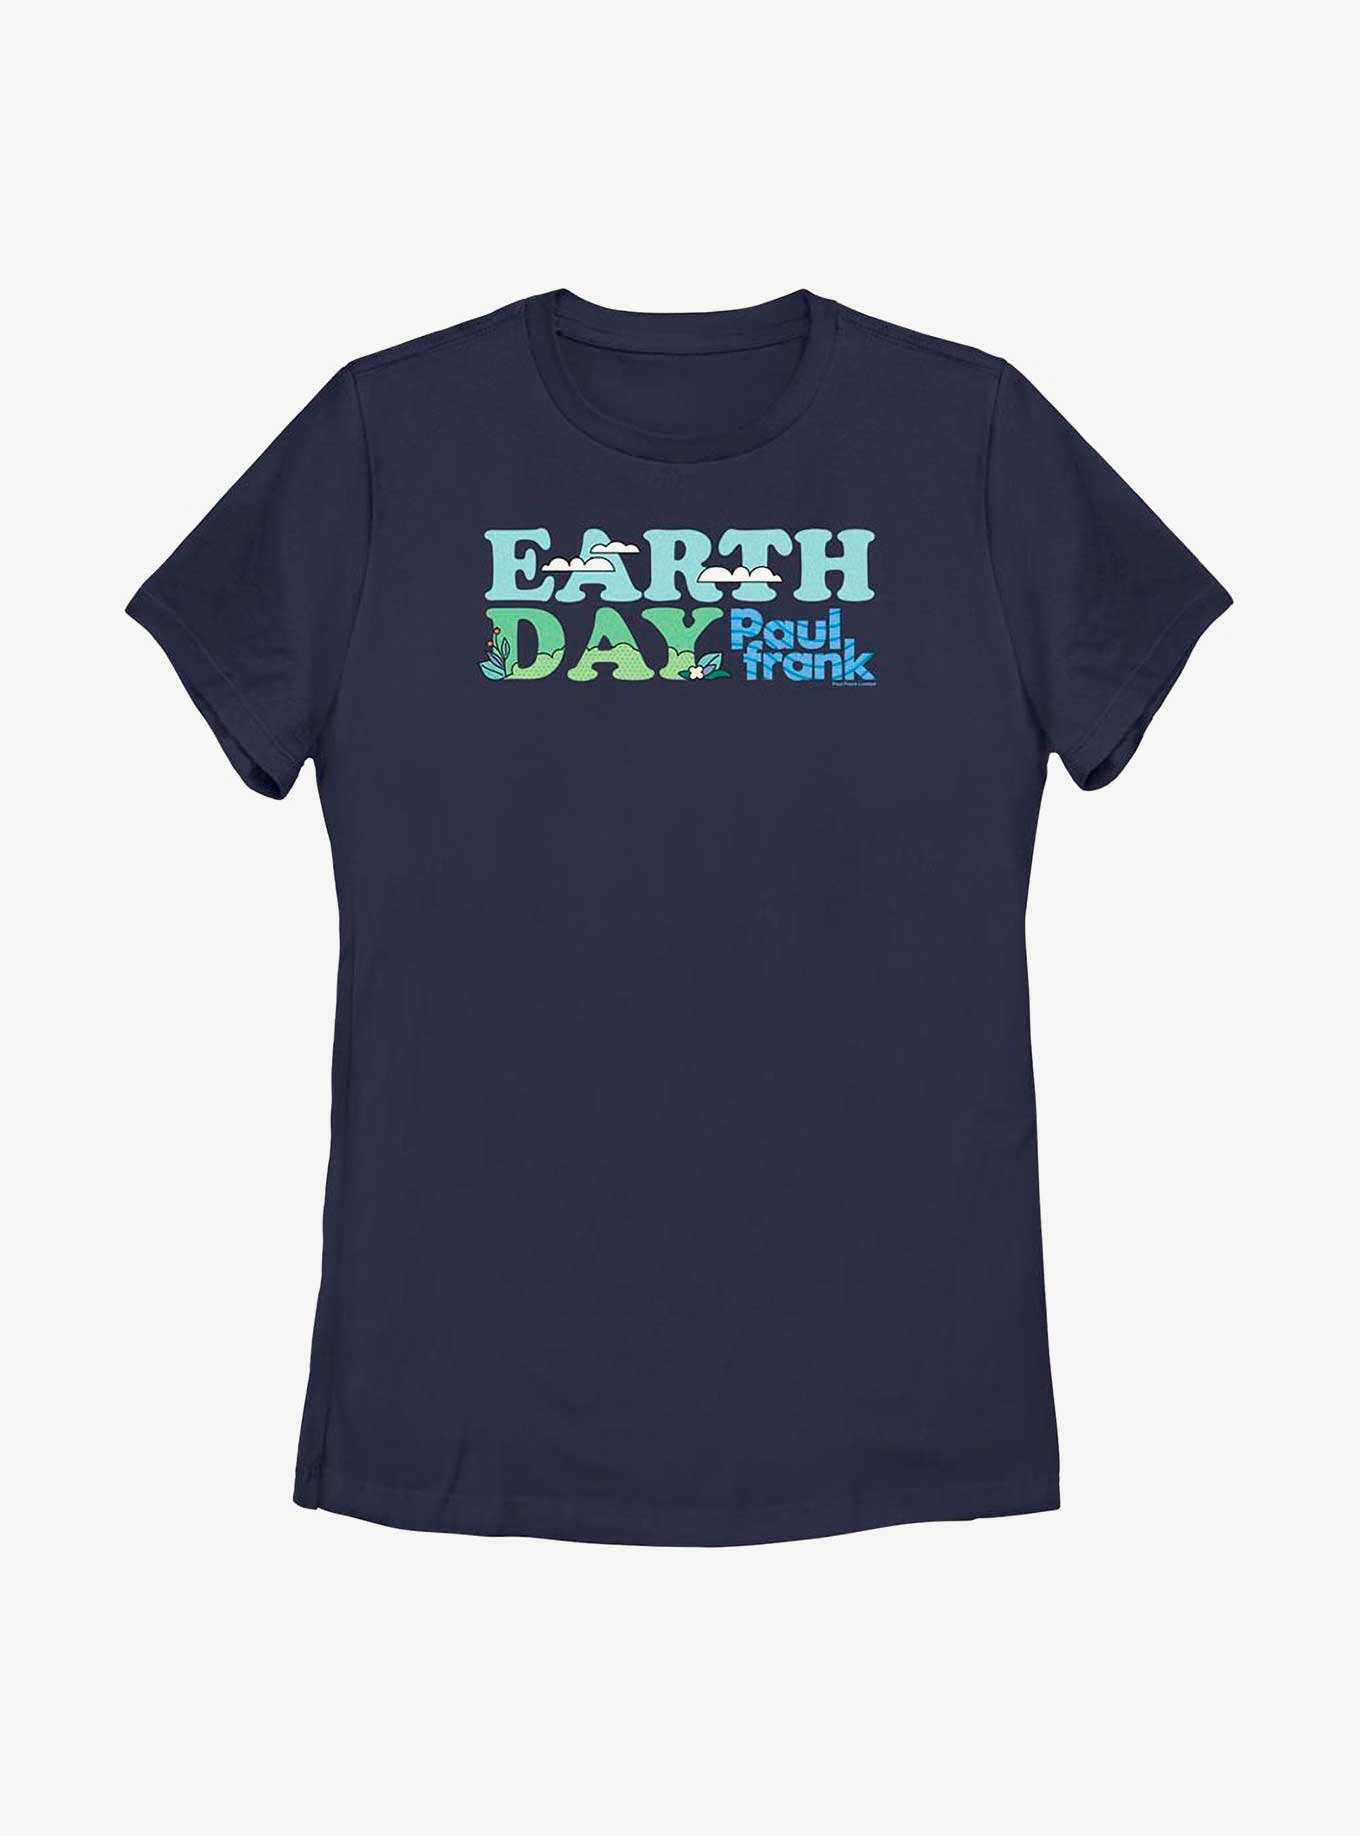 Paul Frank Earth Day Womens T-Shirt, , hi-res